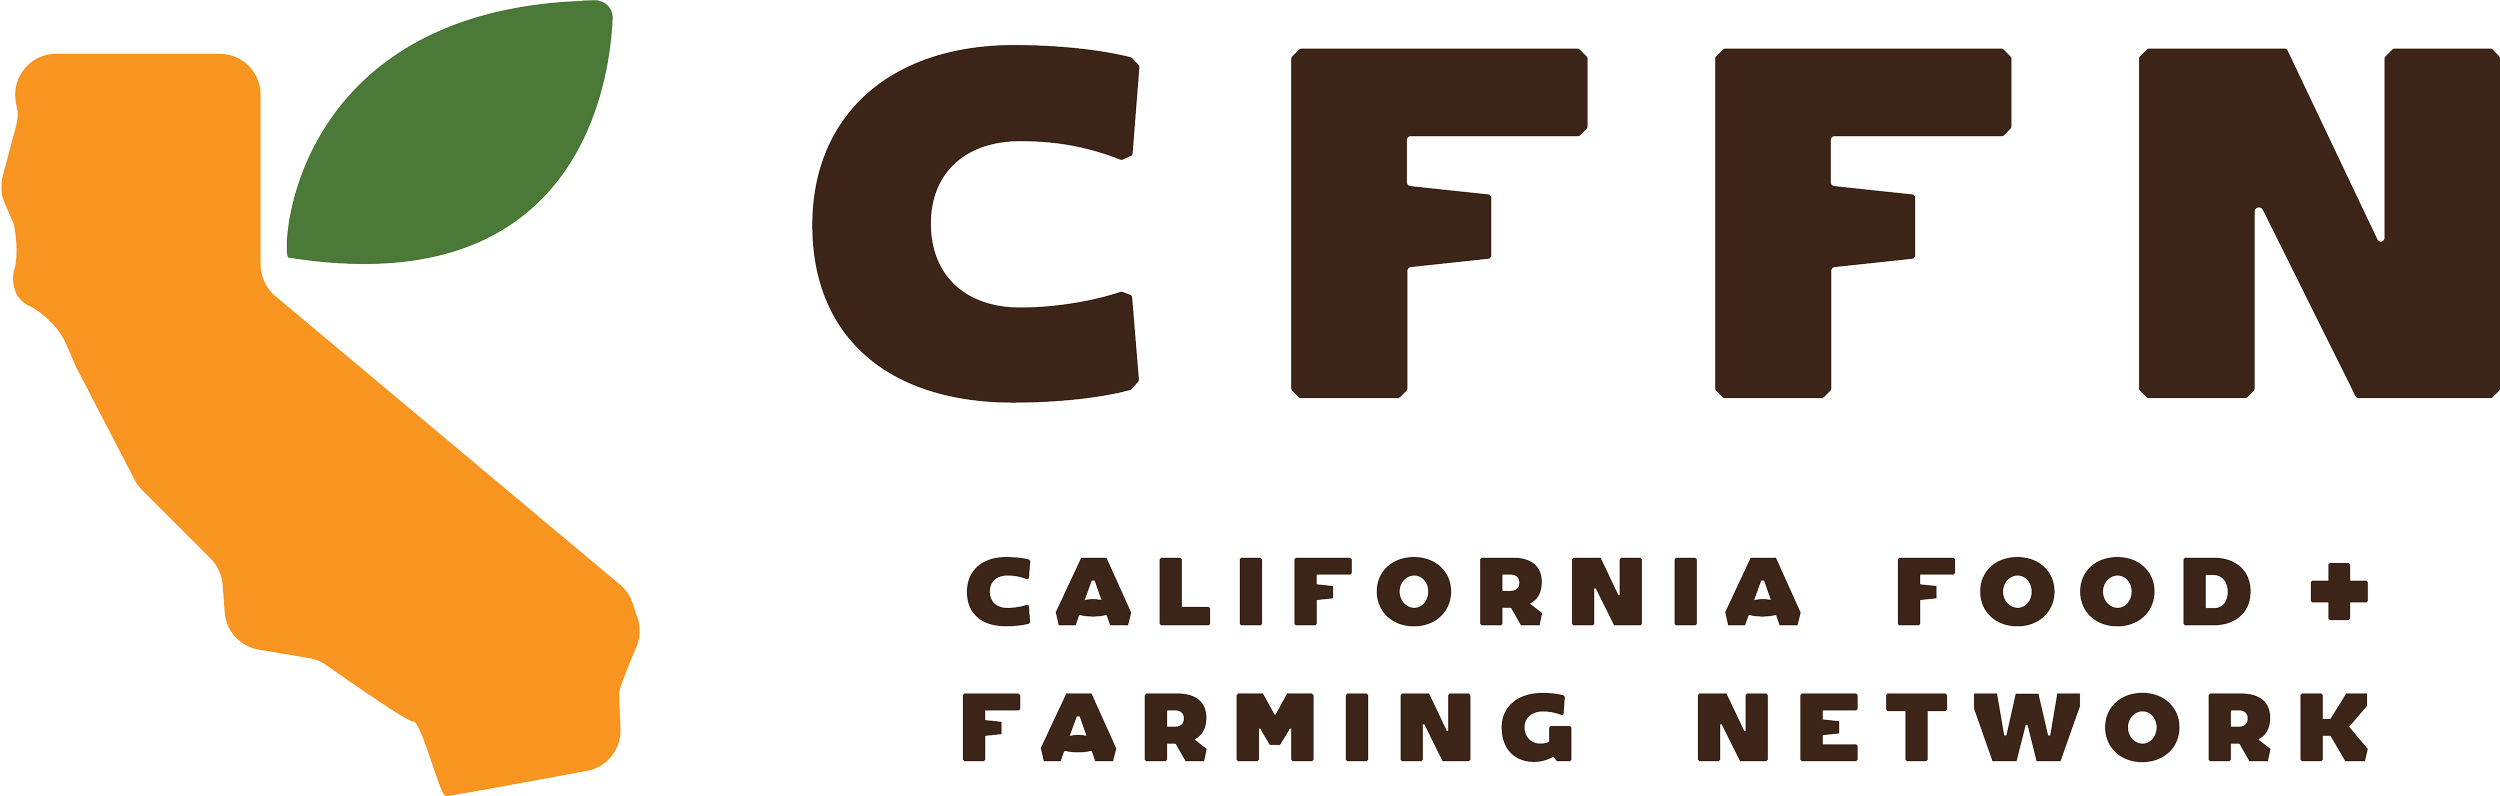 California Food and Farming Network (CFFN)